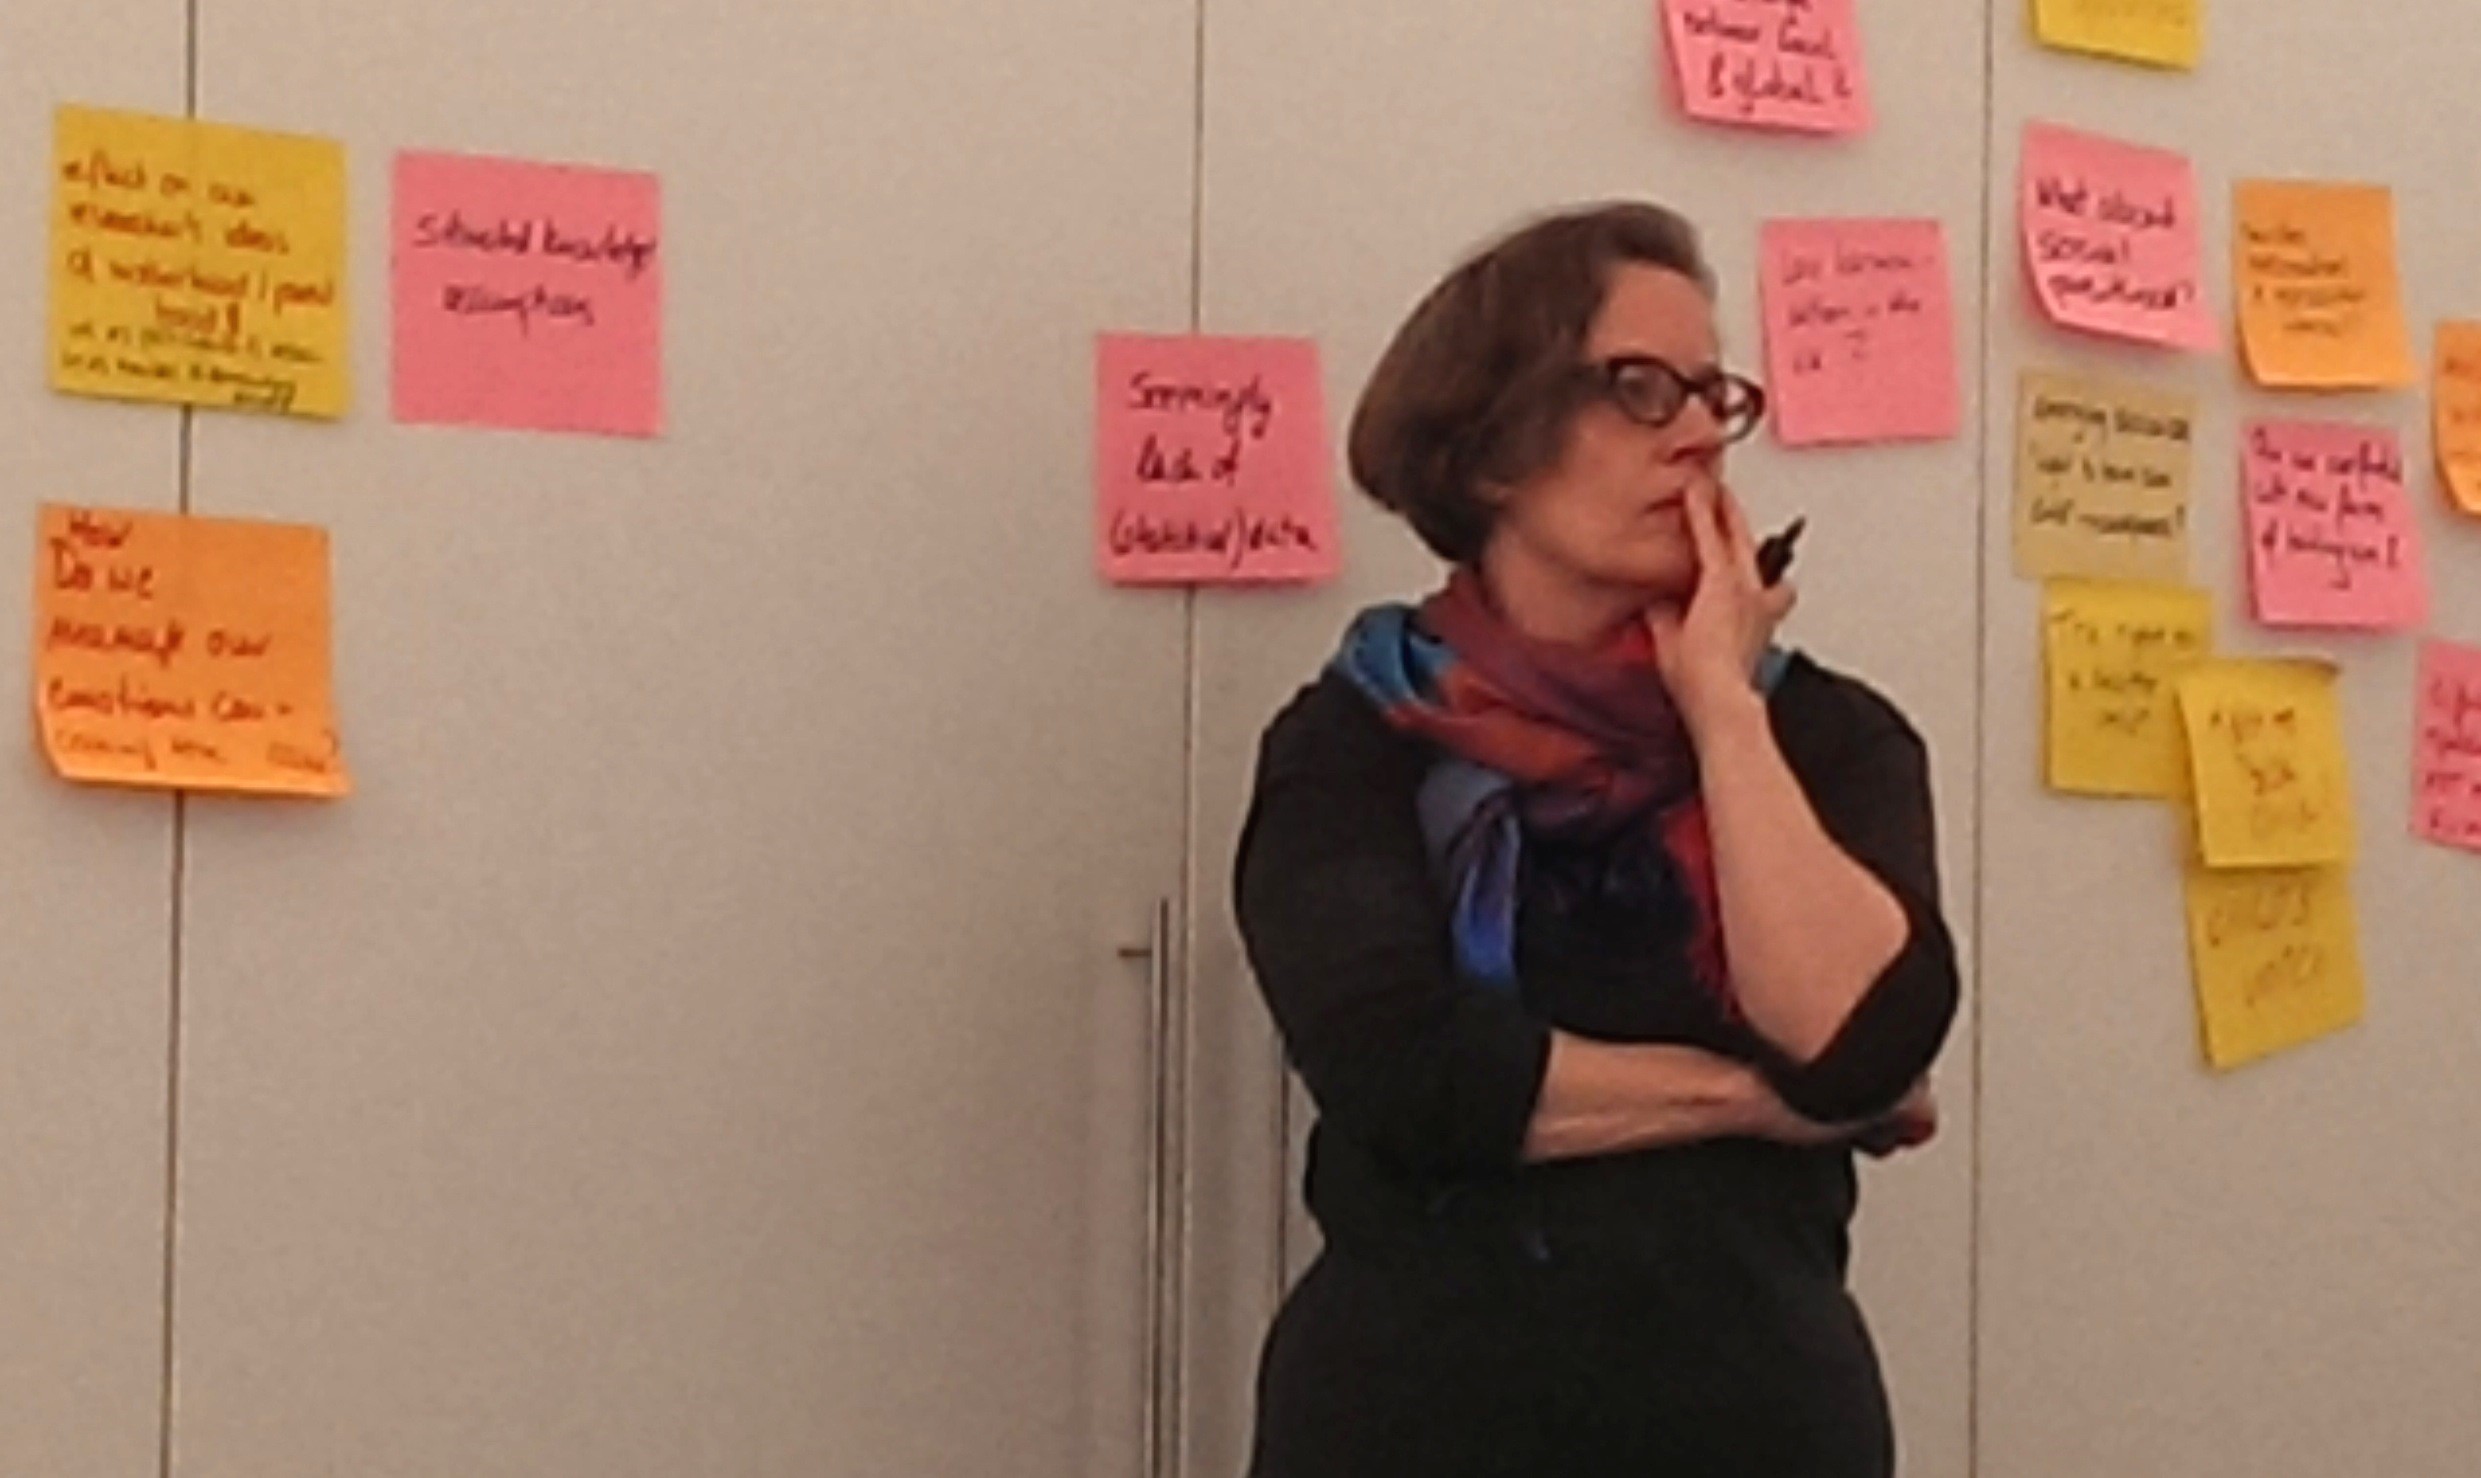 Gesine Fuchs (Hochschule Luzern) leading our mind-map session